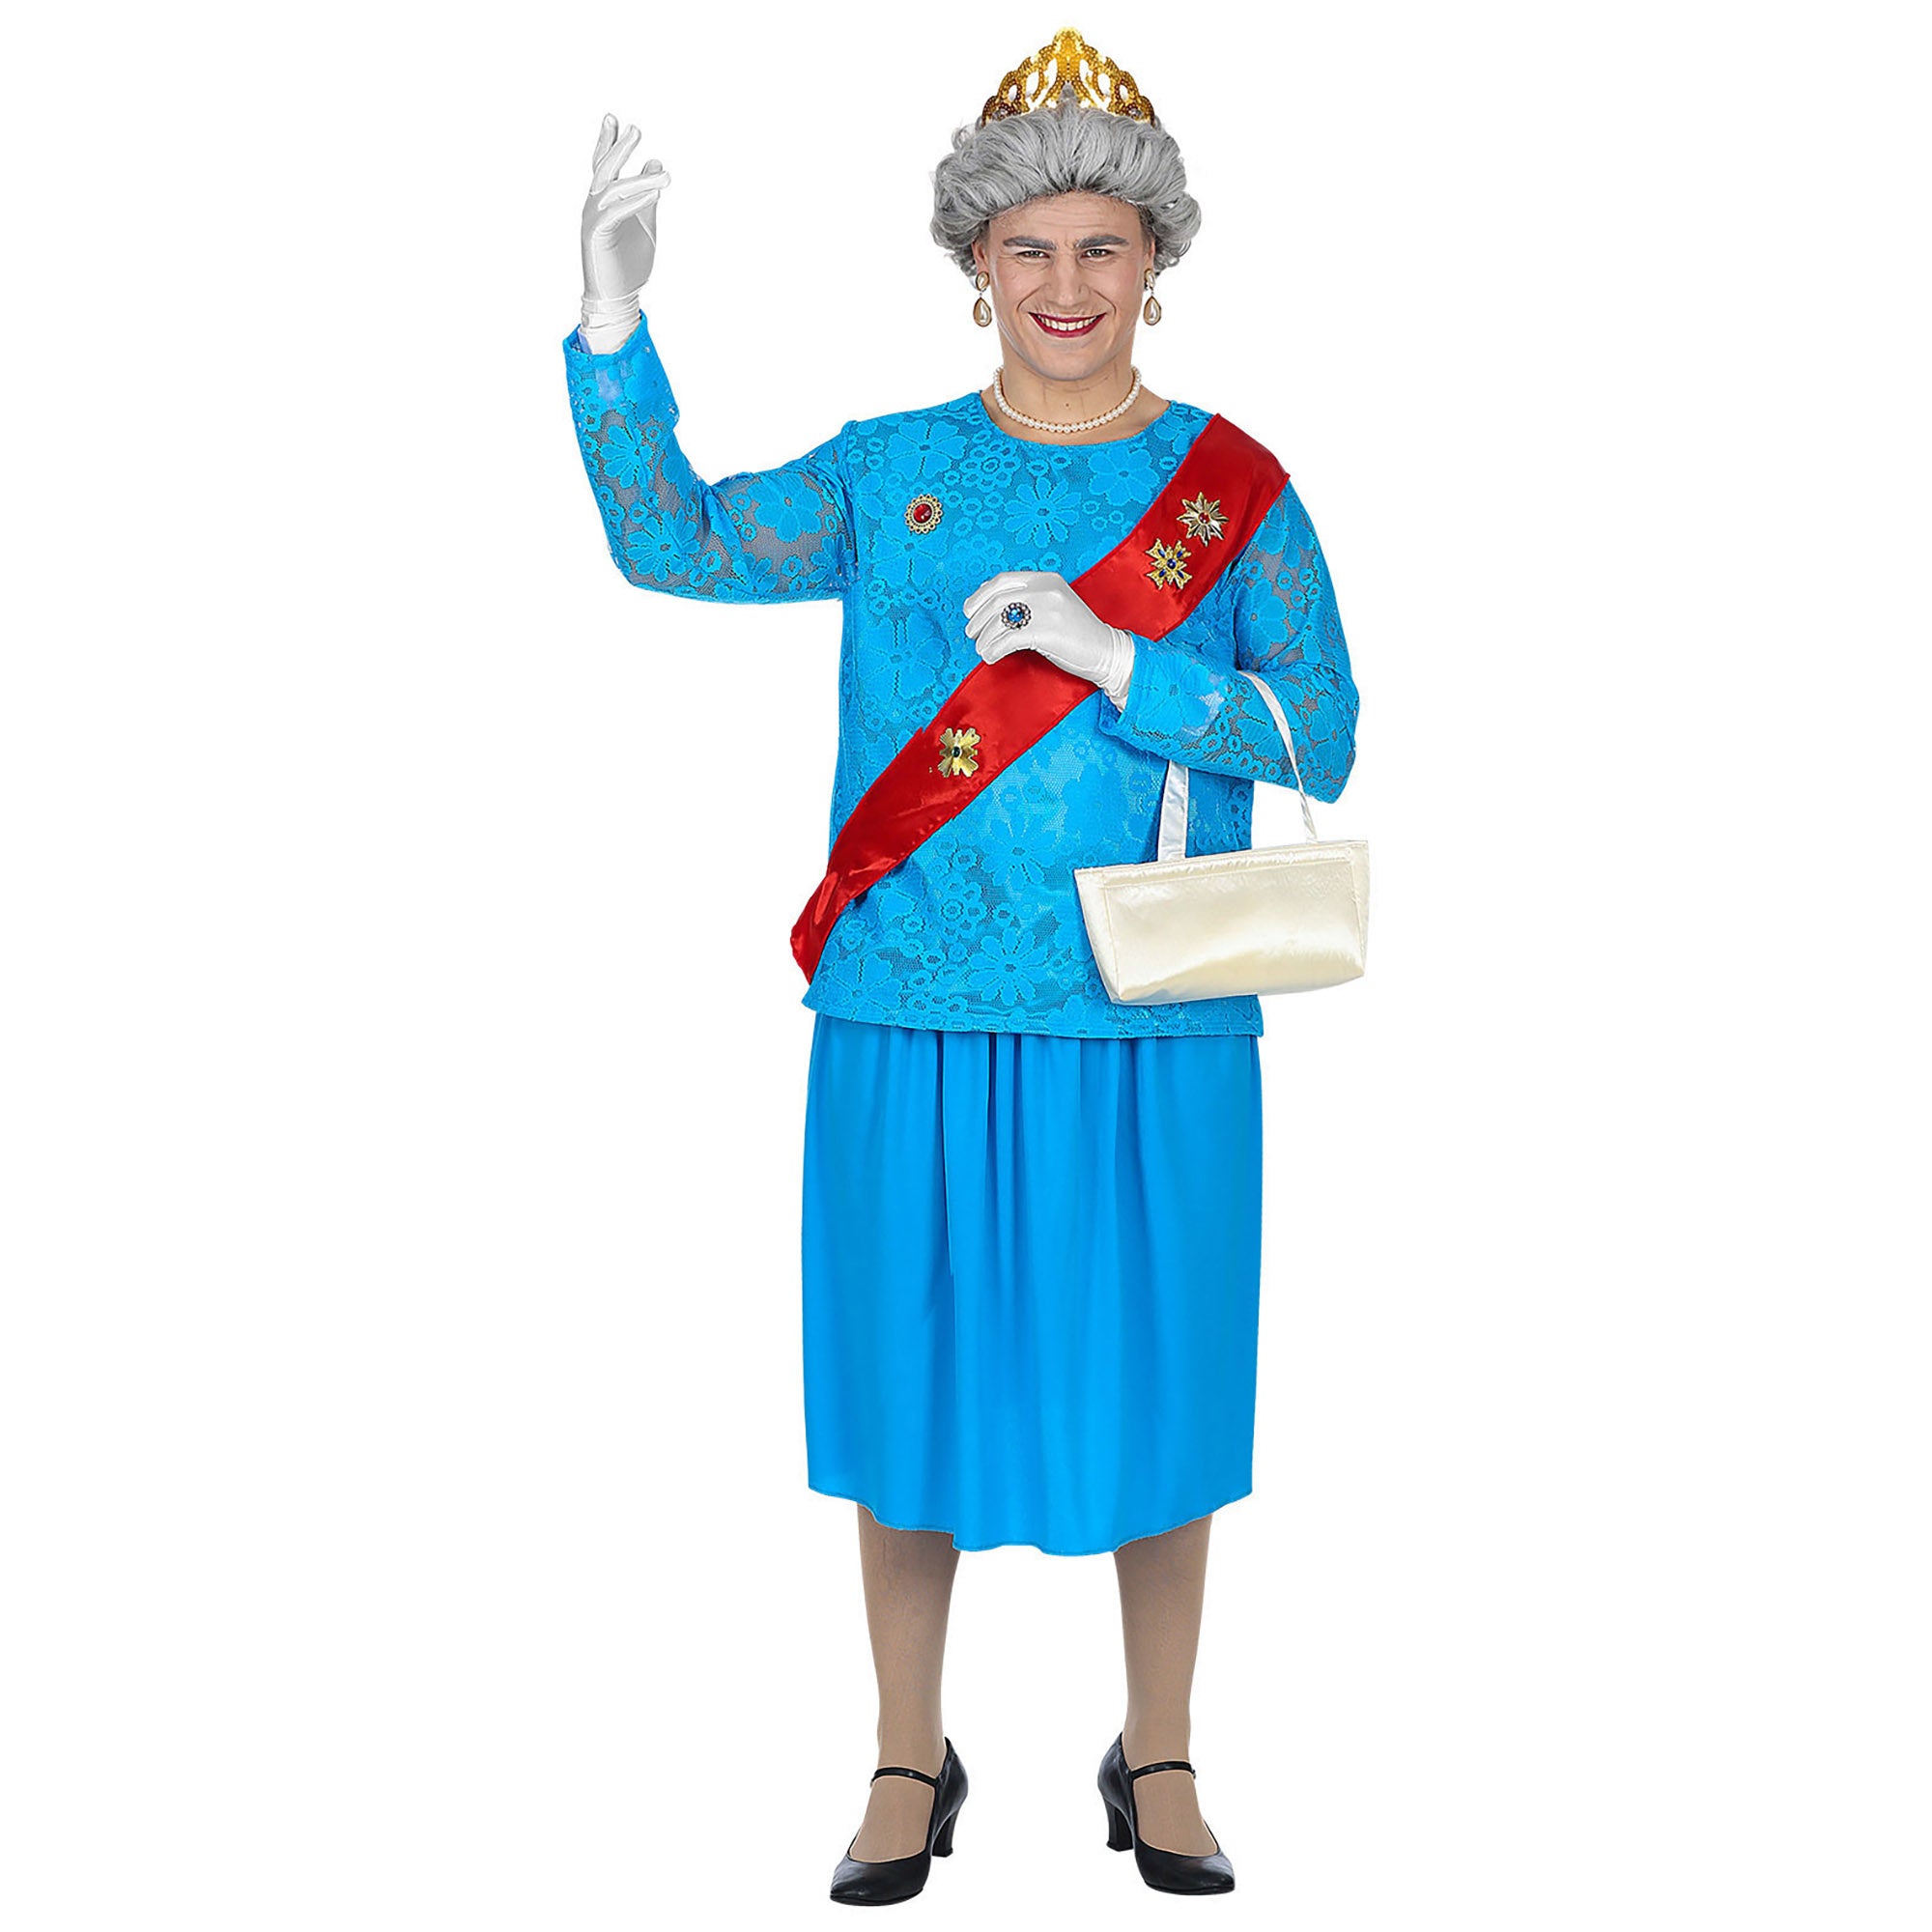 Widmann - Koning Prins & Adel Kostuum - The Queen Koningin Van Engeland Elizabeth - Man - blauw - XL - Carnavalskleding - Verkleedkleding